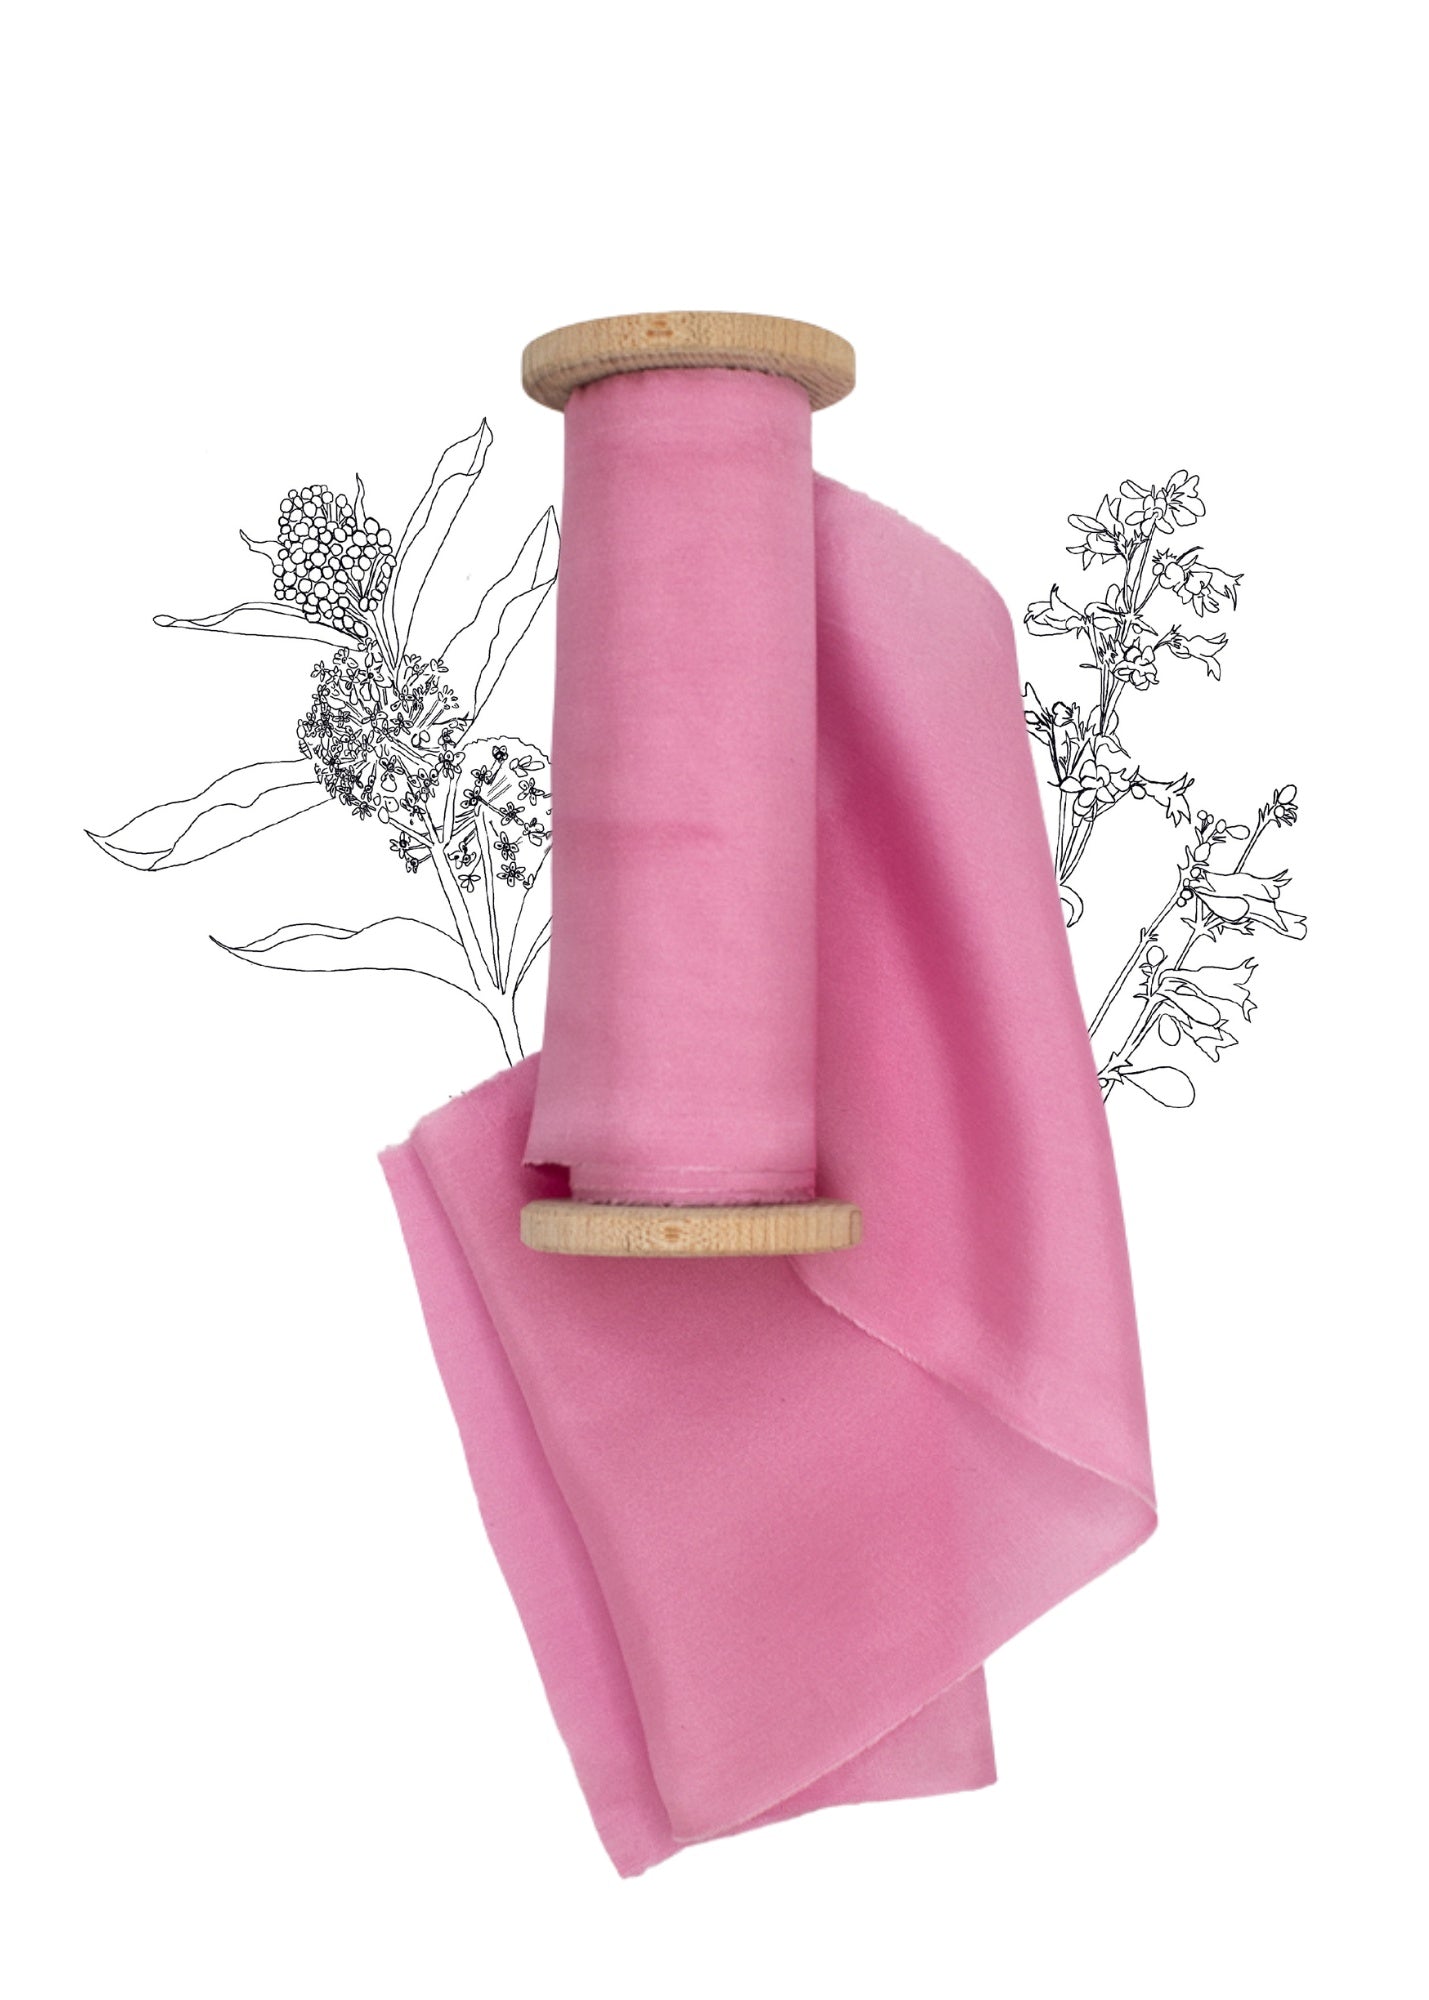 Geranium ribbon setGibb & Hiney, hand-dyed silk ribbon, 5 colors, 2  widths